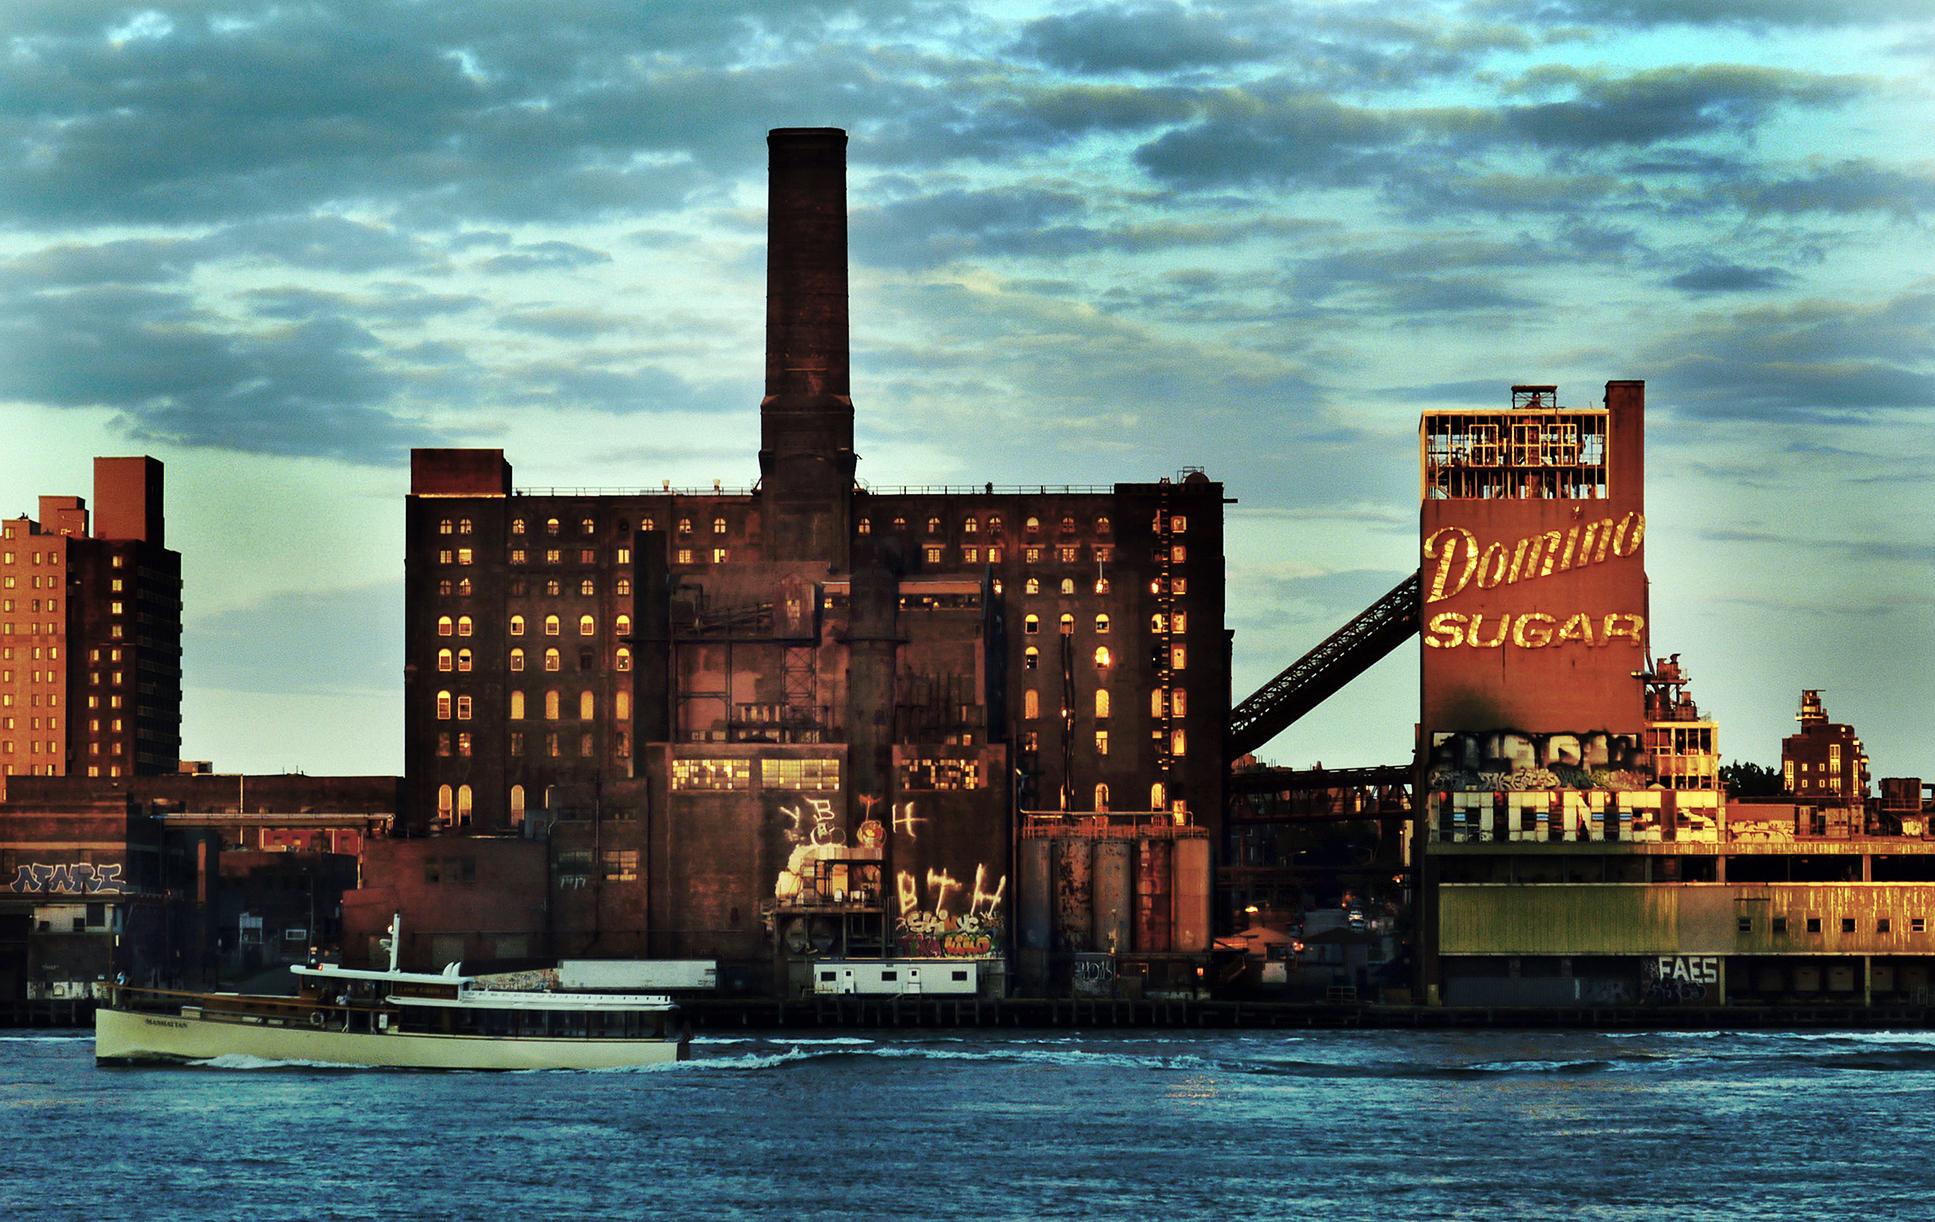 Fernando Natalici Landscape Photograph - Domino Sugar Factory Williamsburg Brooklyn photo (Brooklyn New York photograph) 